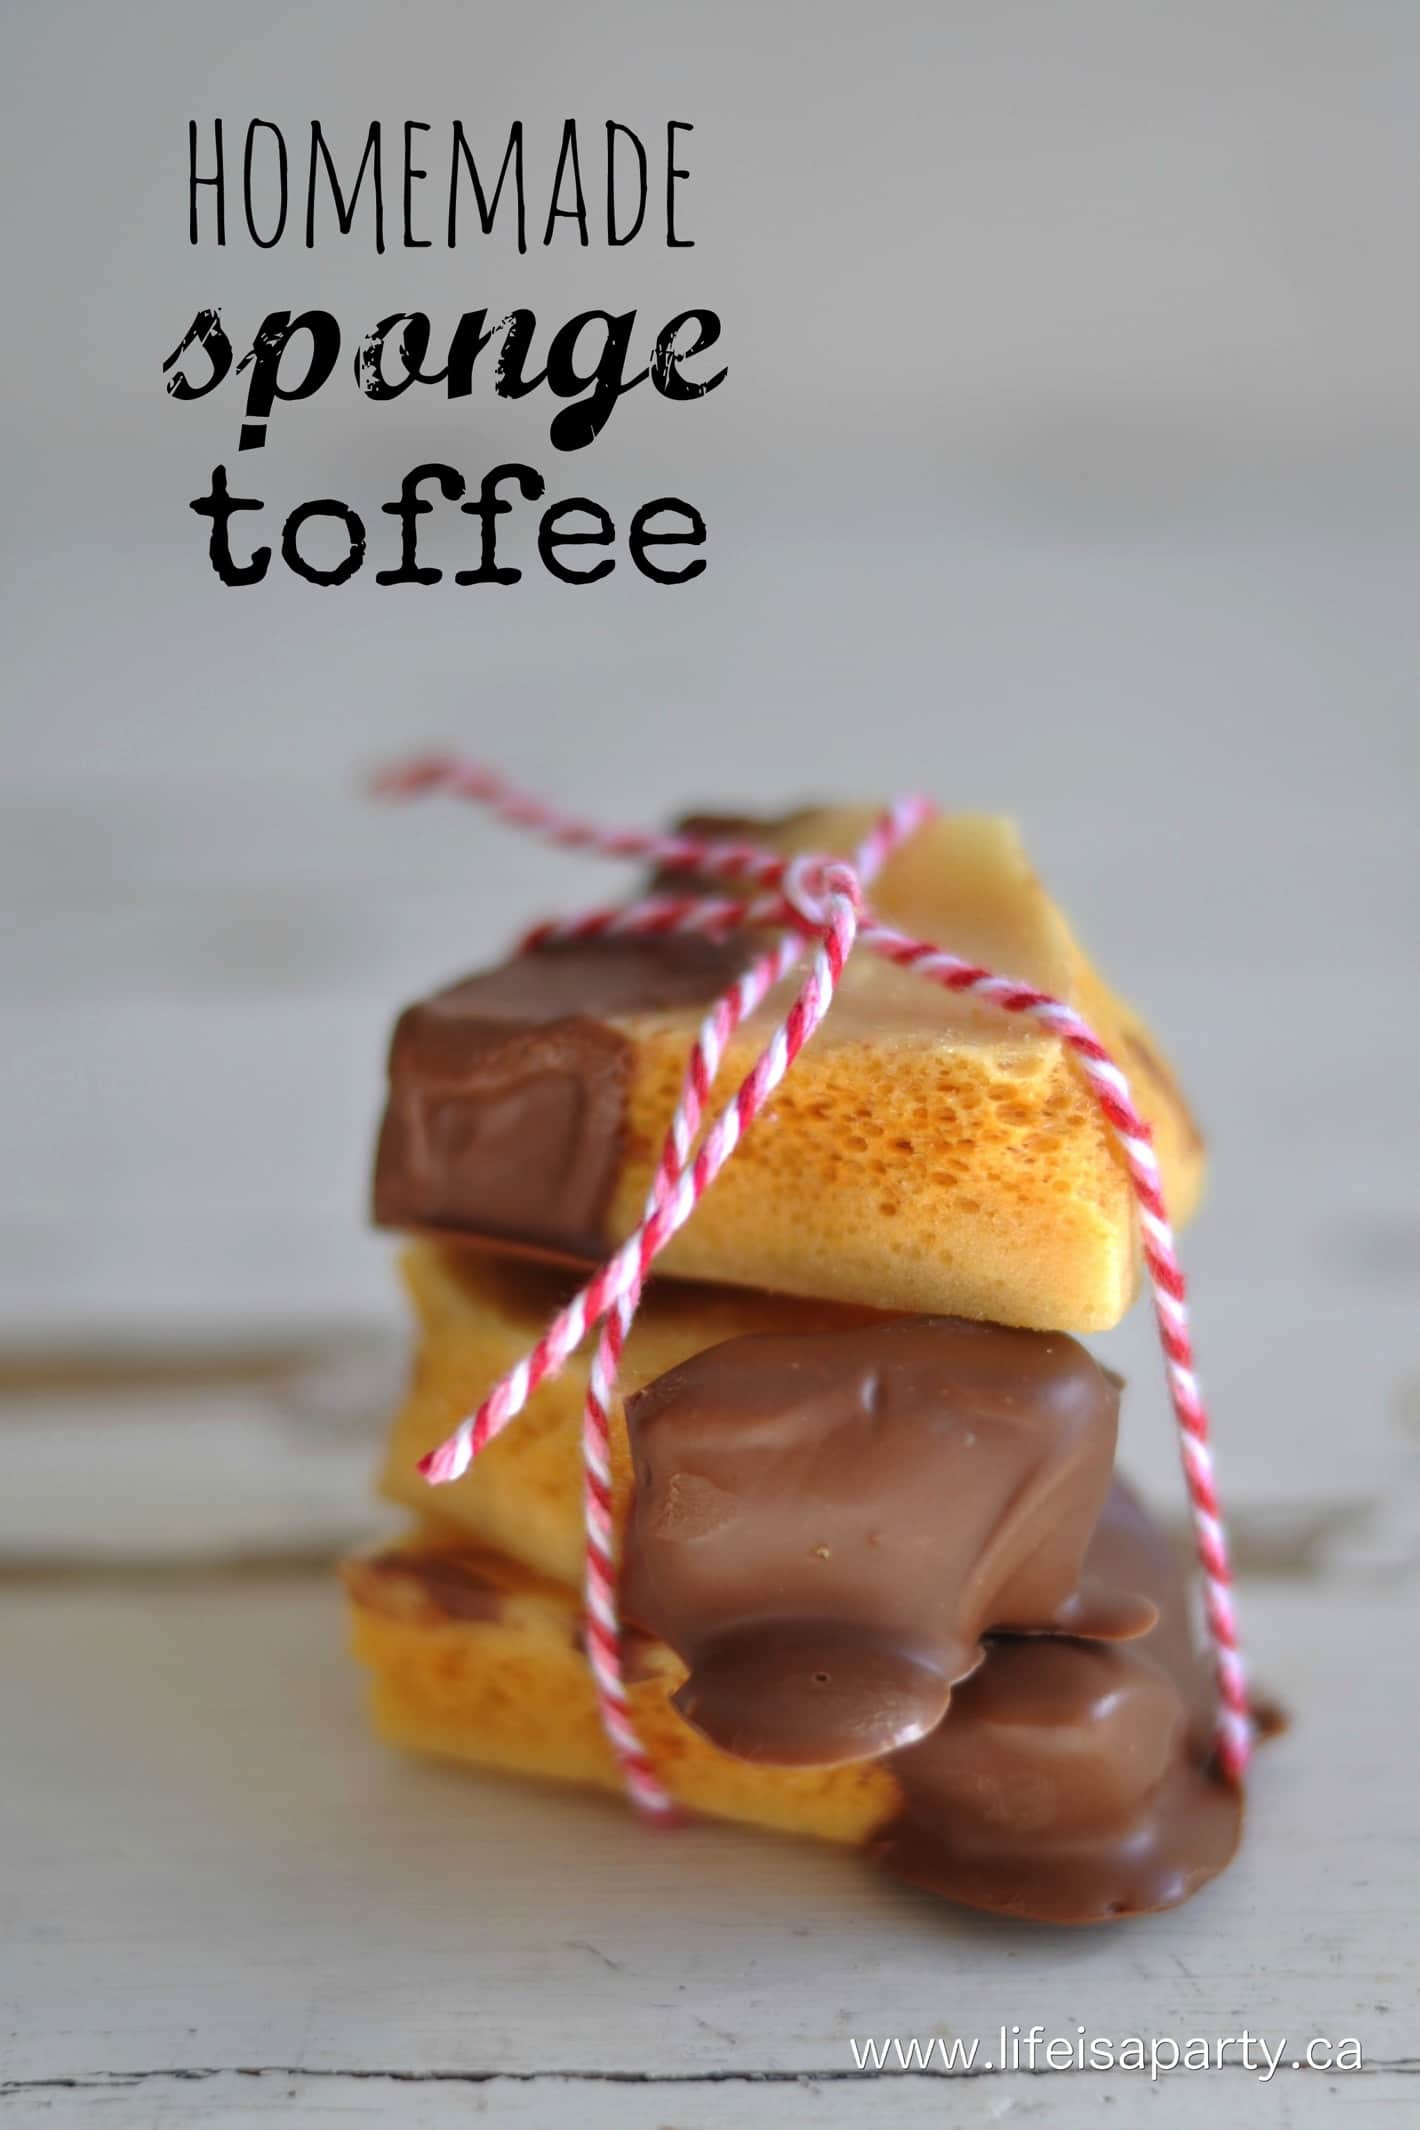 Homemade Sponge Toffee Candy Recipe